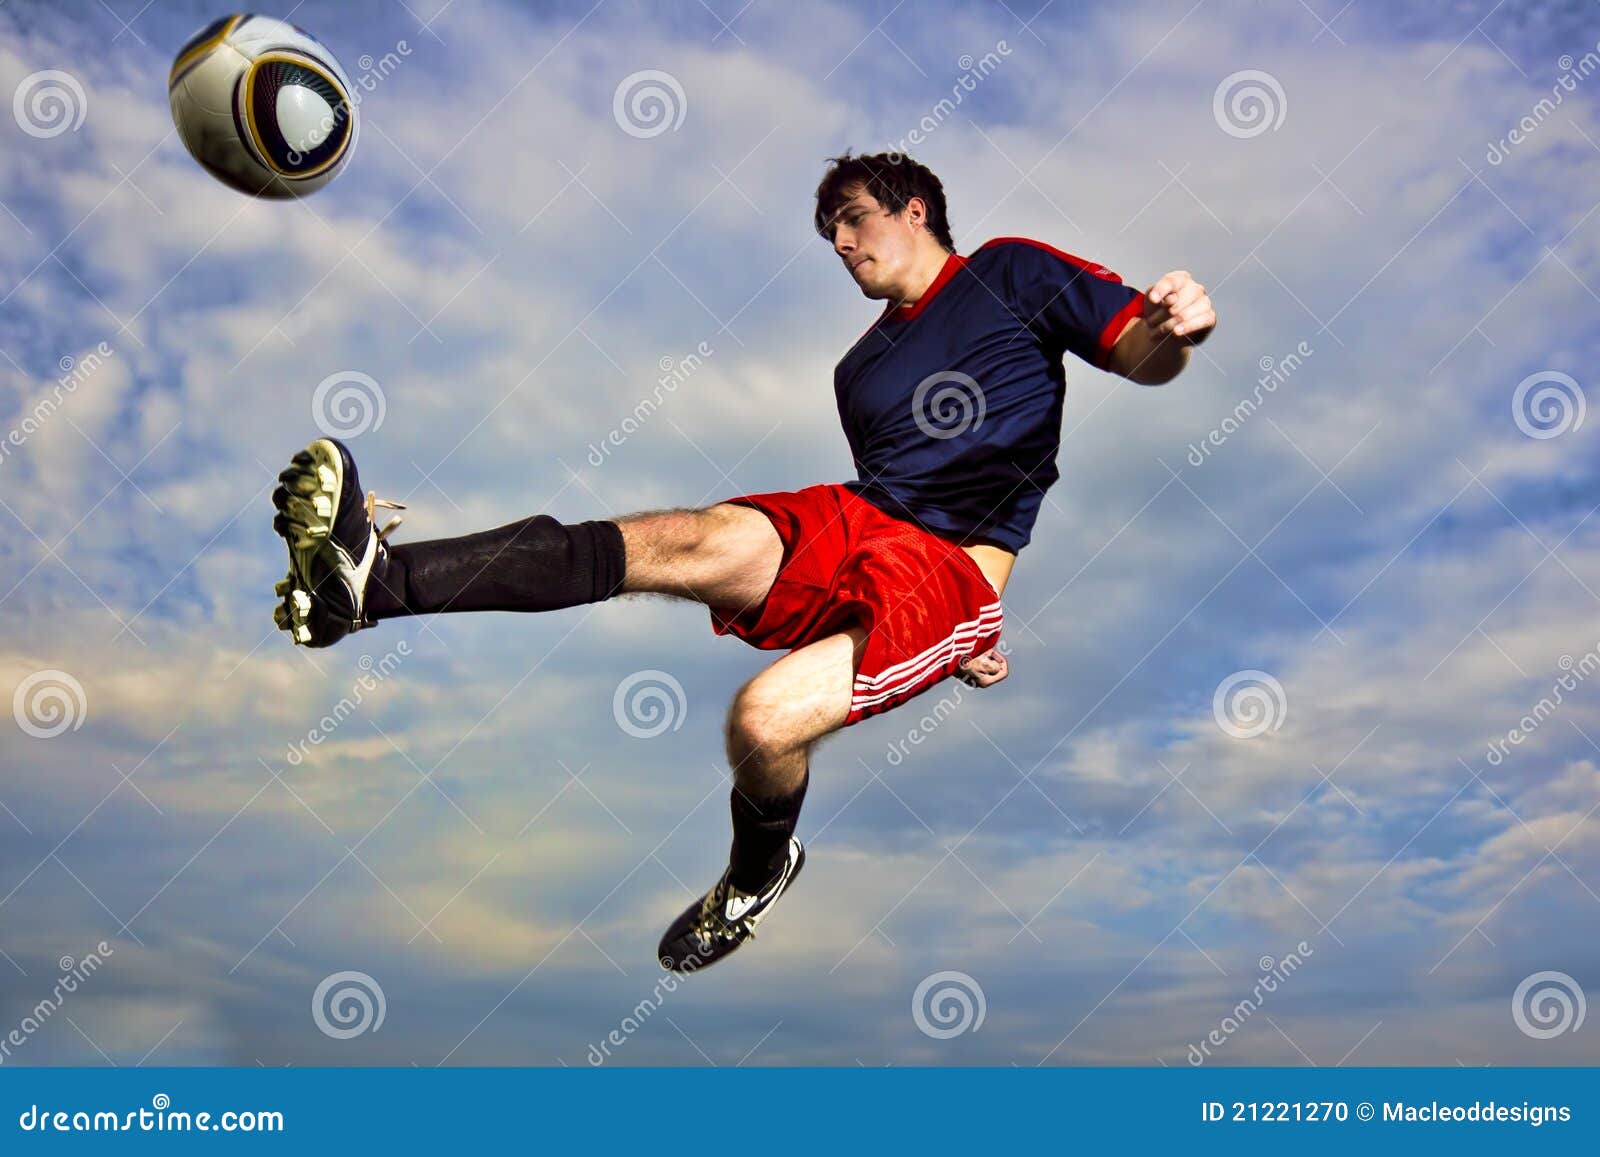 A young man kicks a soccerball midair. A young man in the air against a blue cloudy sky kicking a soccer ball